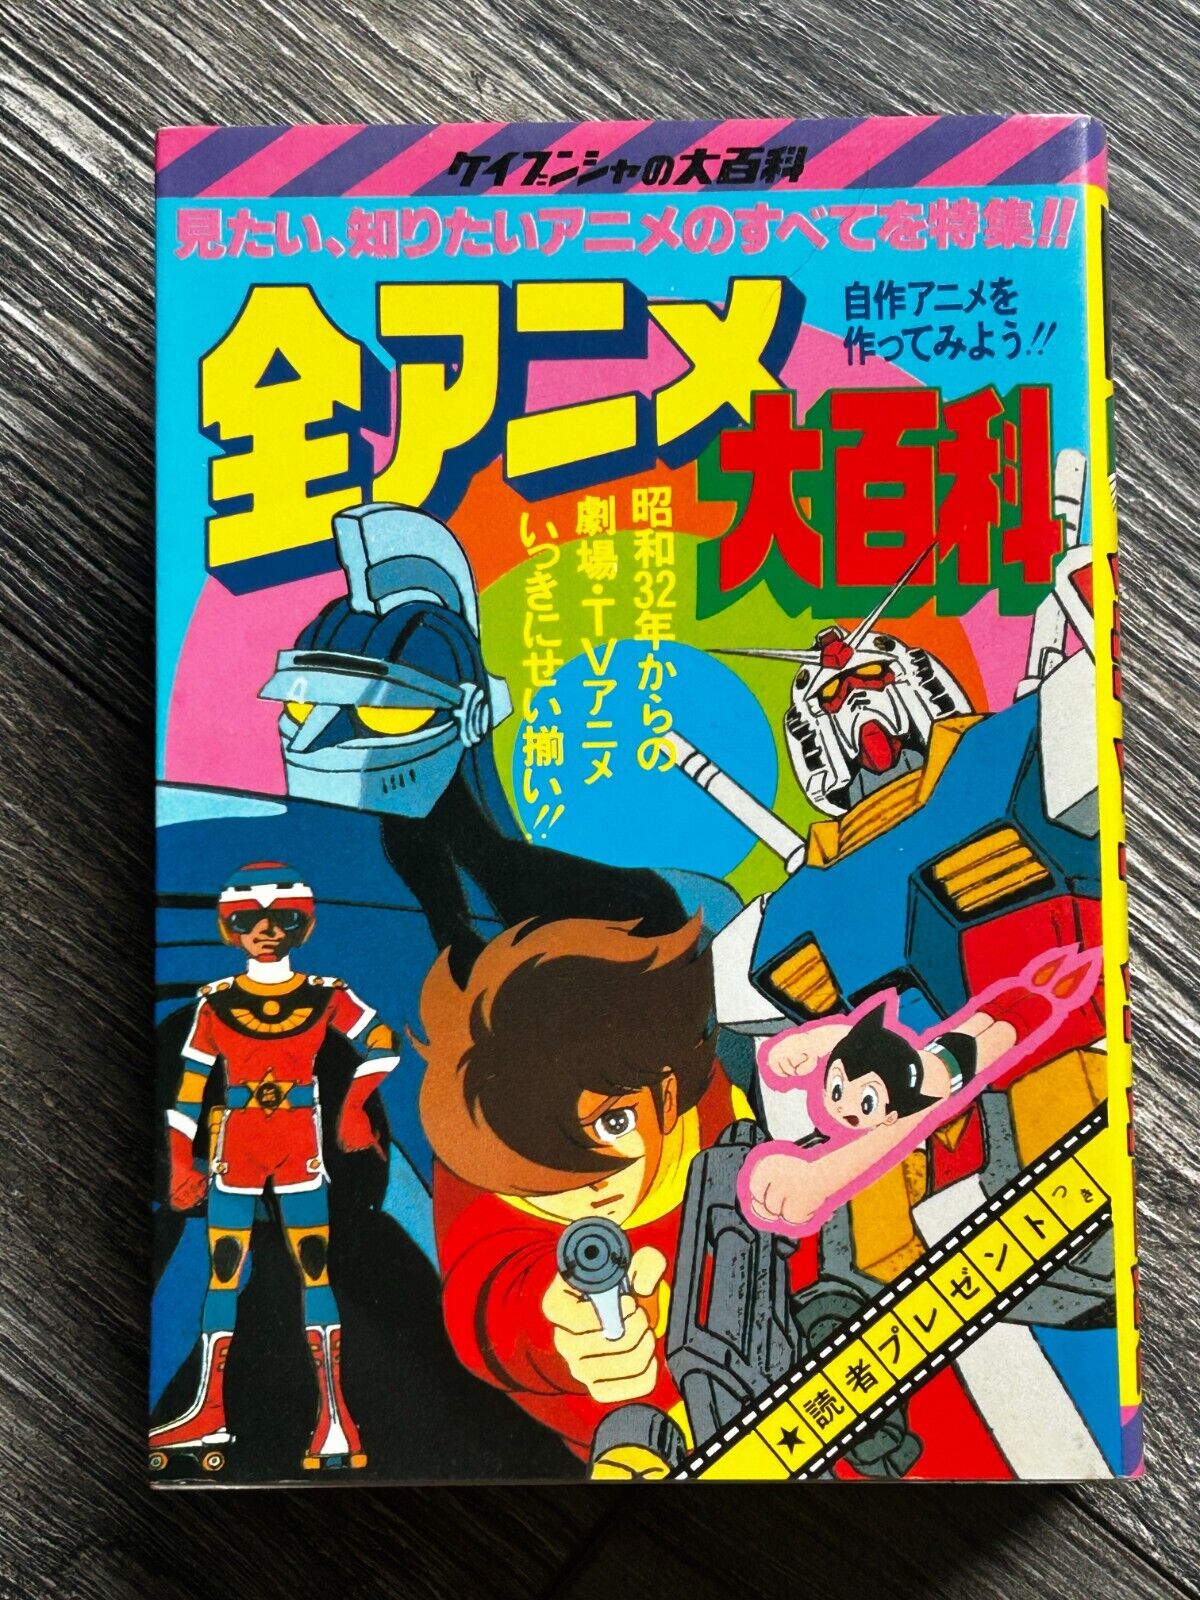 Encyclopedia Of All Anime 76 Keibunsha 1981 Japan Manga Animated TV Shows